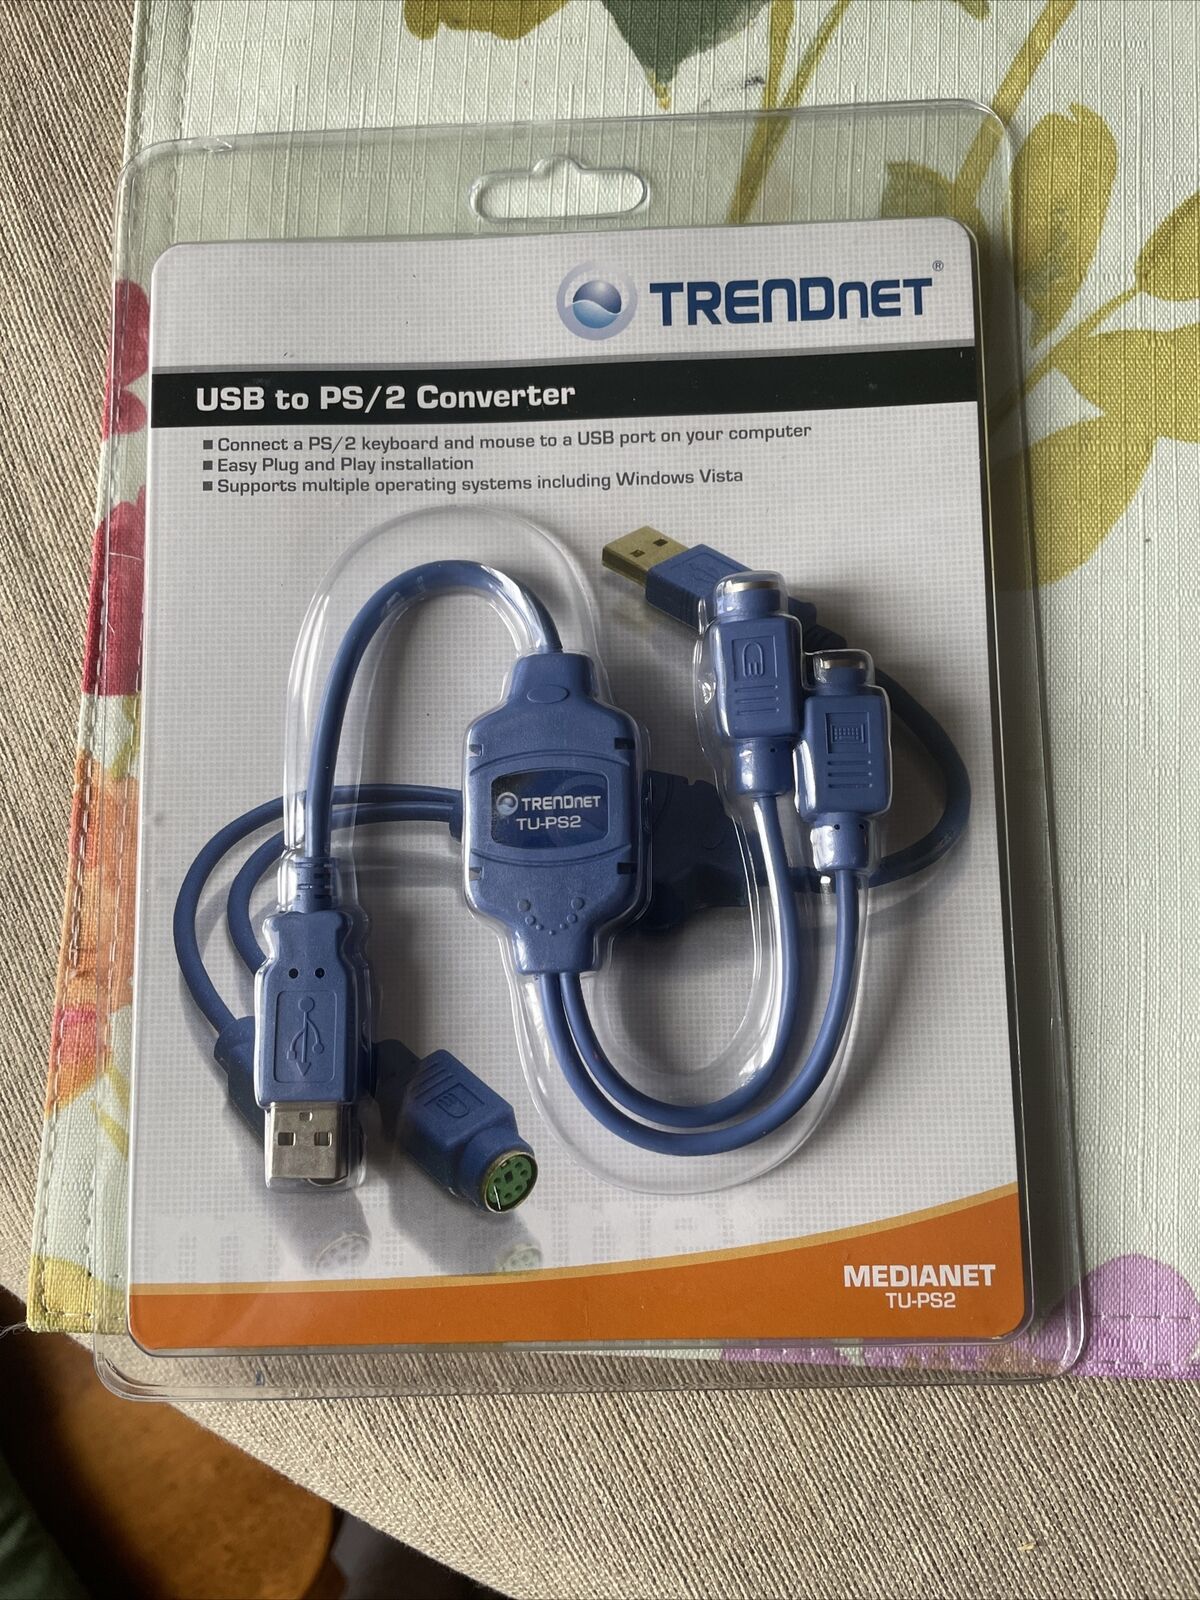 Trendnet TU-PS2 Medianet USB to PS/2 Converter New Sealed